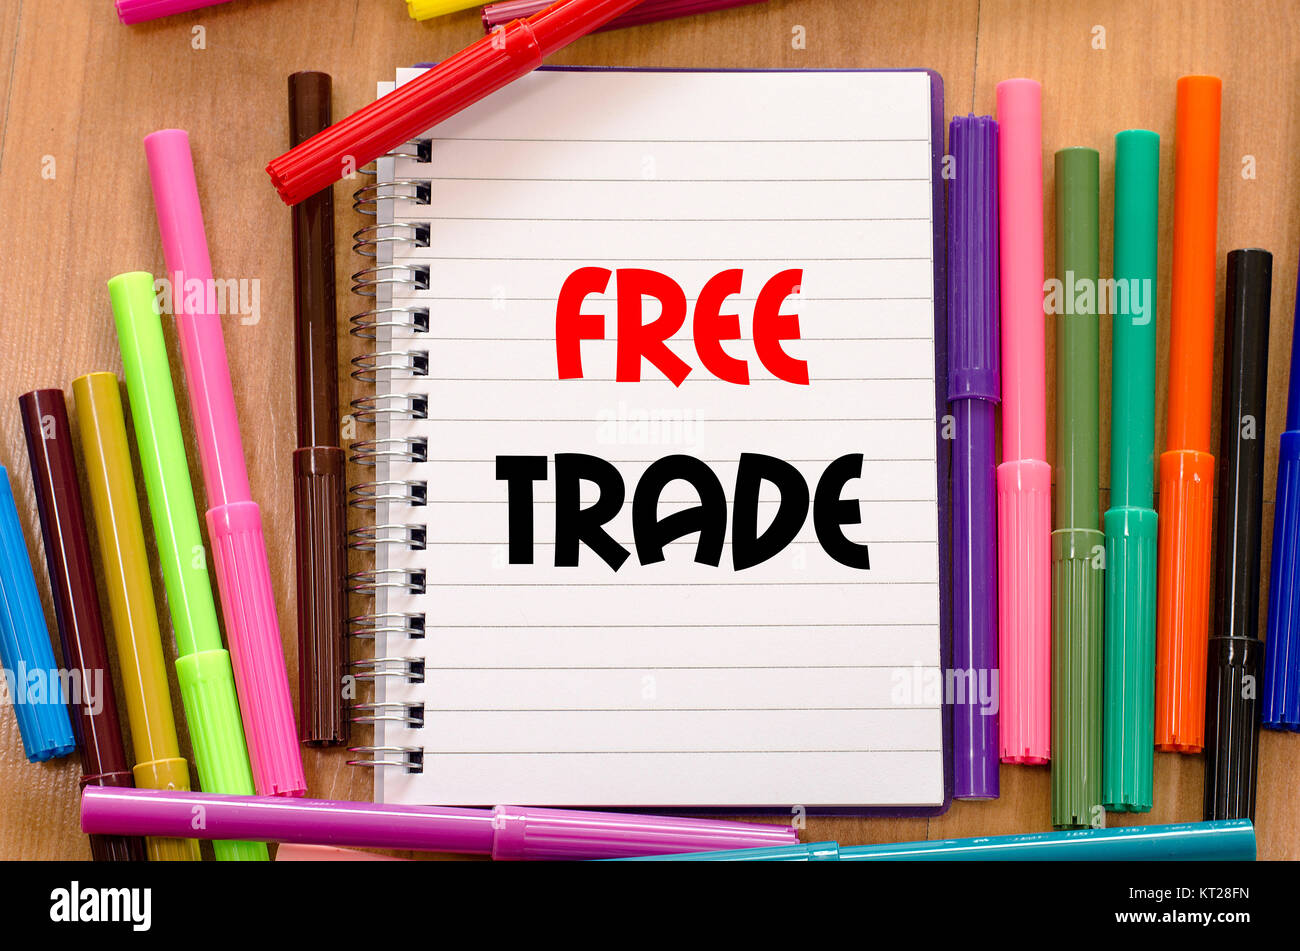 Free trade text concept Stock Photo